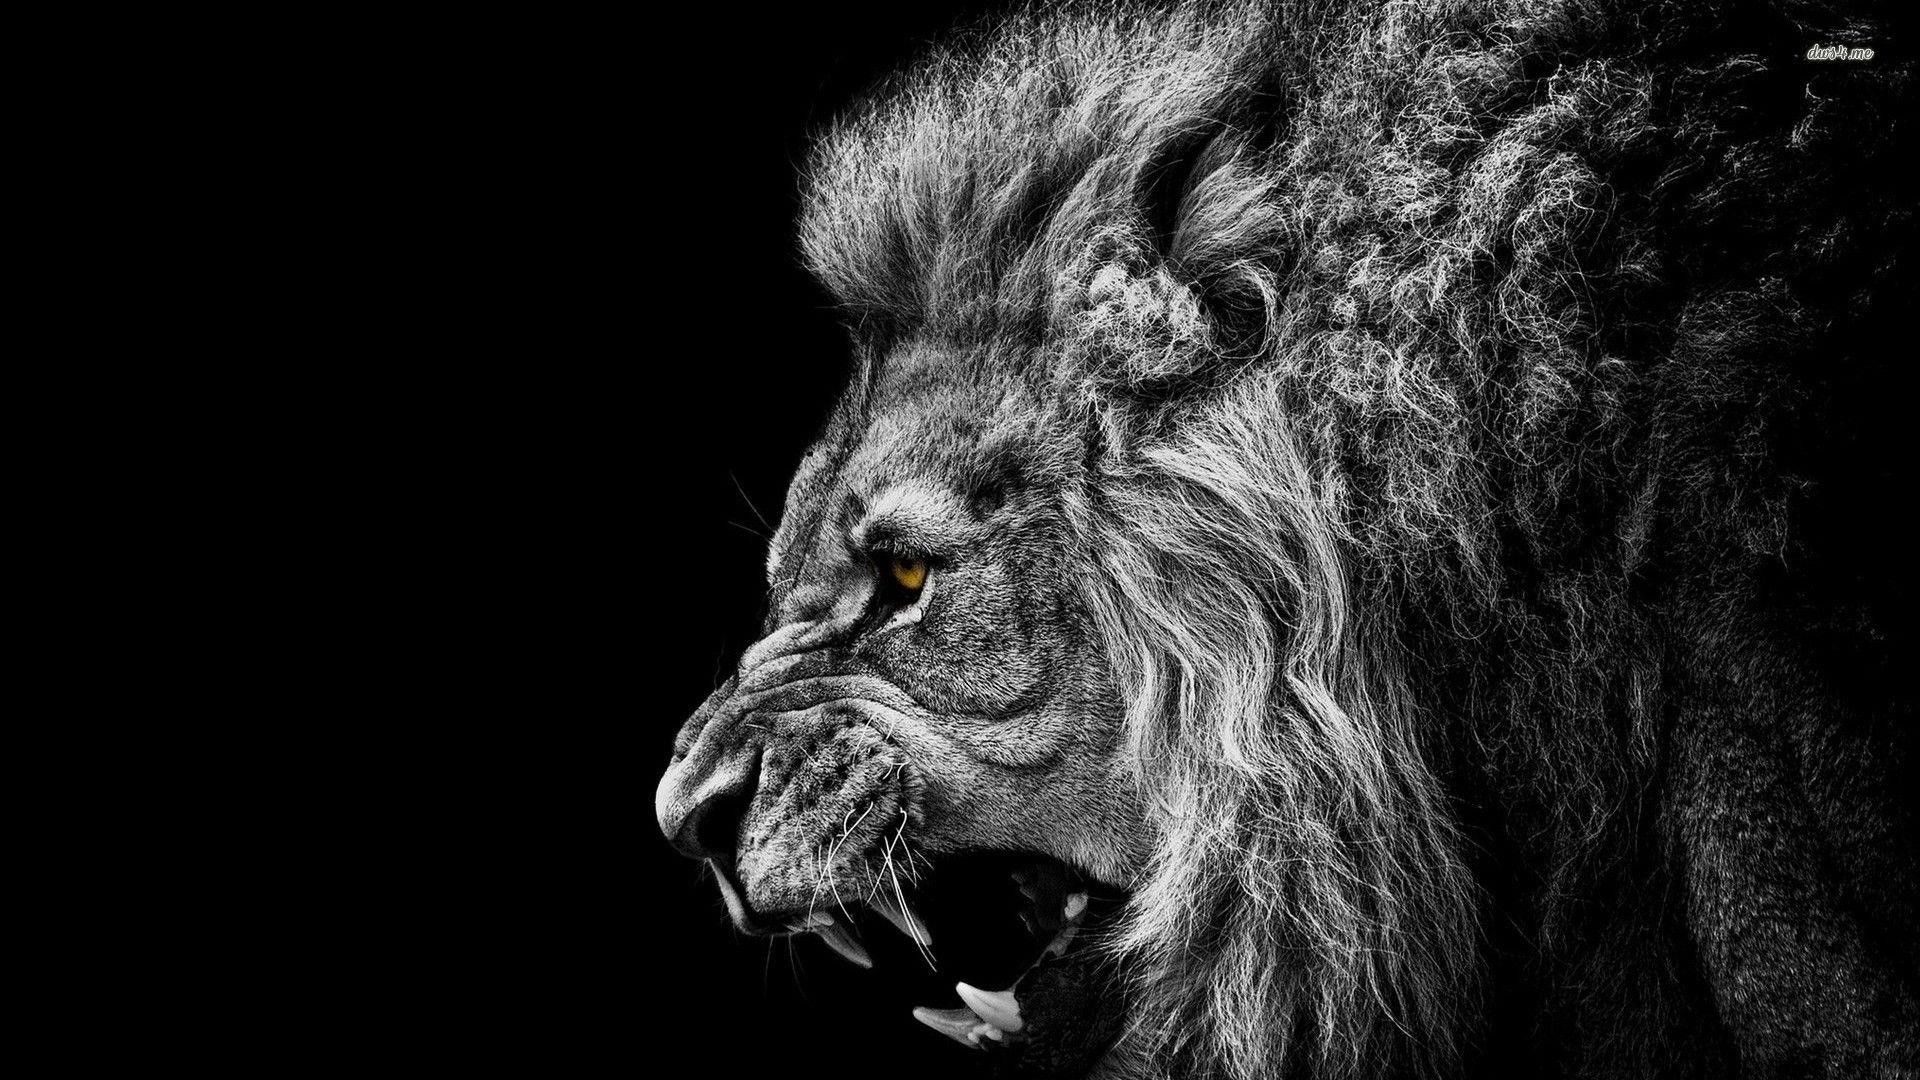 Roaring Lion Wallpaper (best Roaring Lion Wallpaper and image) on WallpaperChat